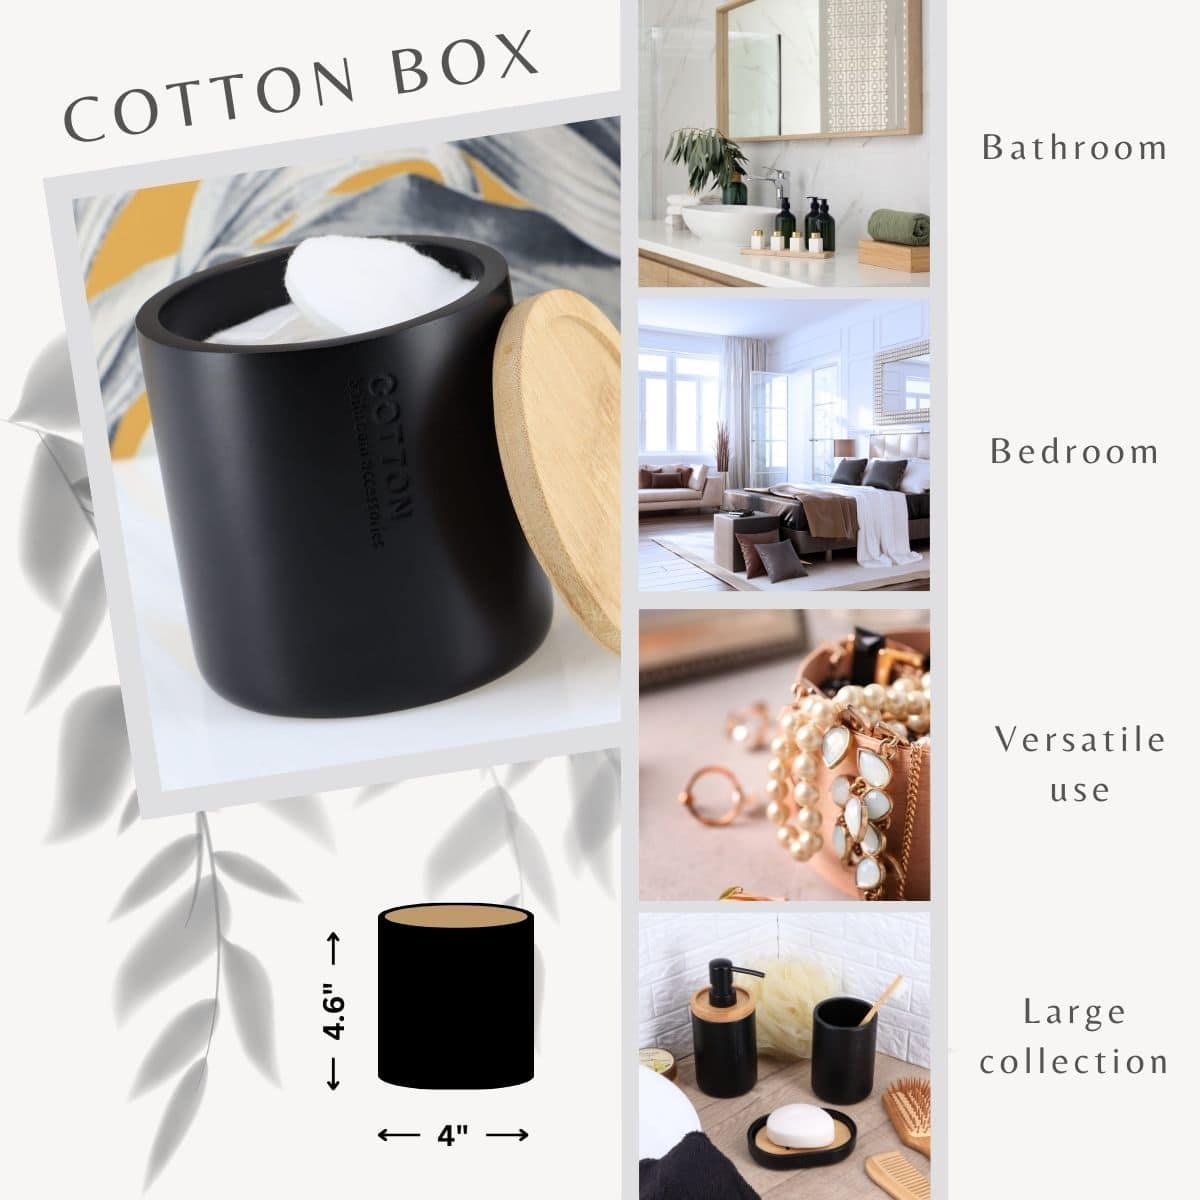 Versatile wooden onyx black cotton box for bathroom bedroom swabs pads balls jewels beauty accessories